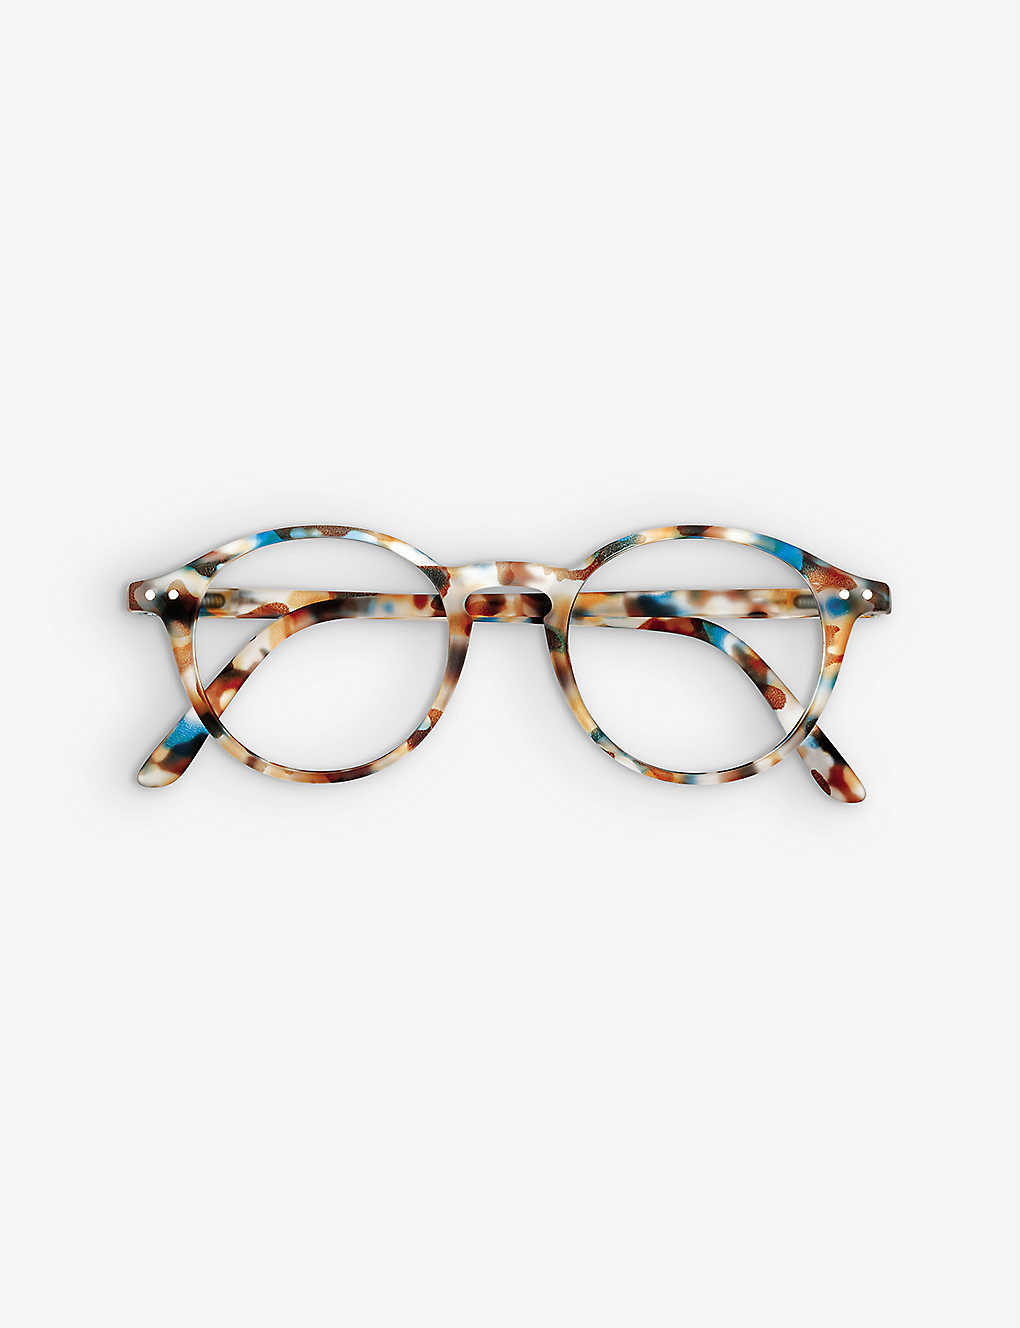 Shop Izipizi Women's Blue Tortoise Screen #d Round-frame Glasses +2